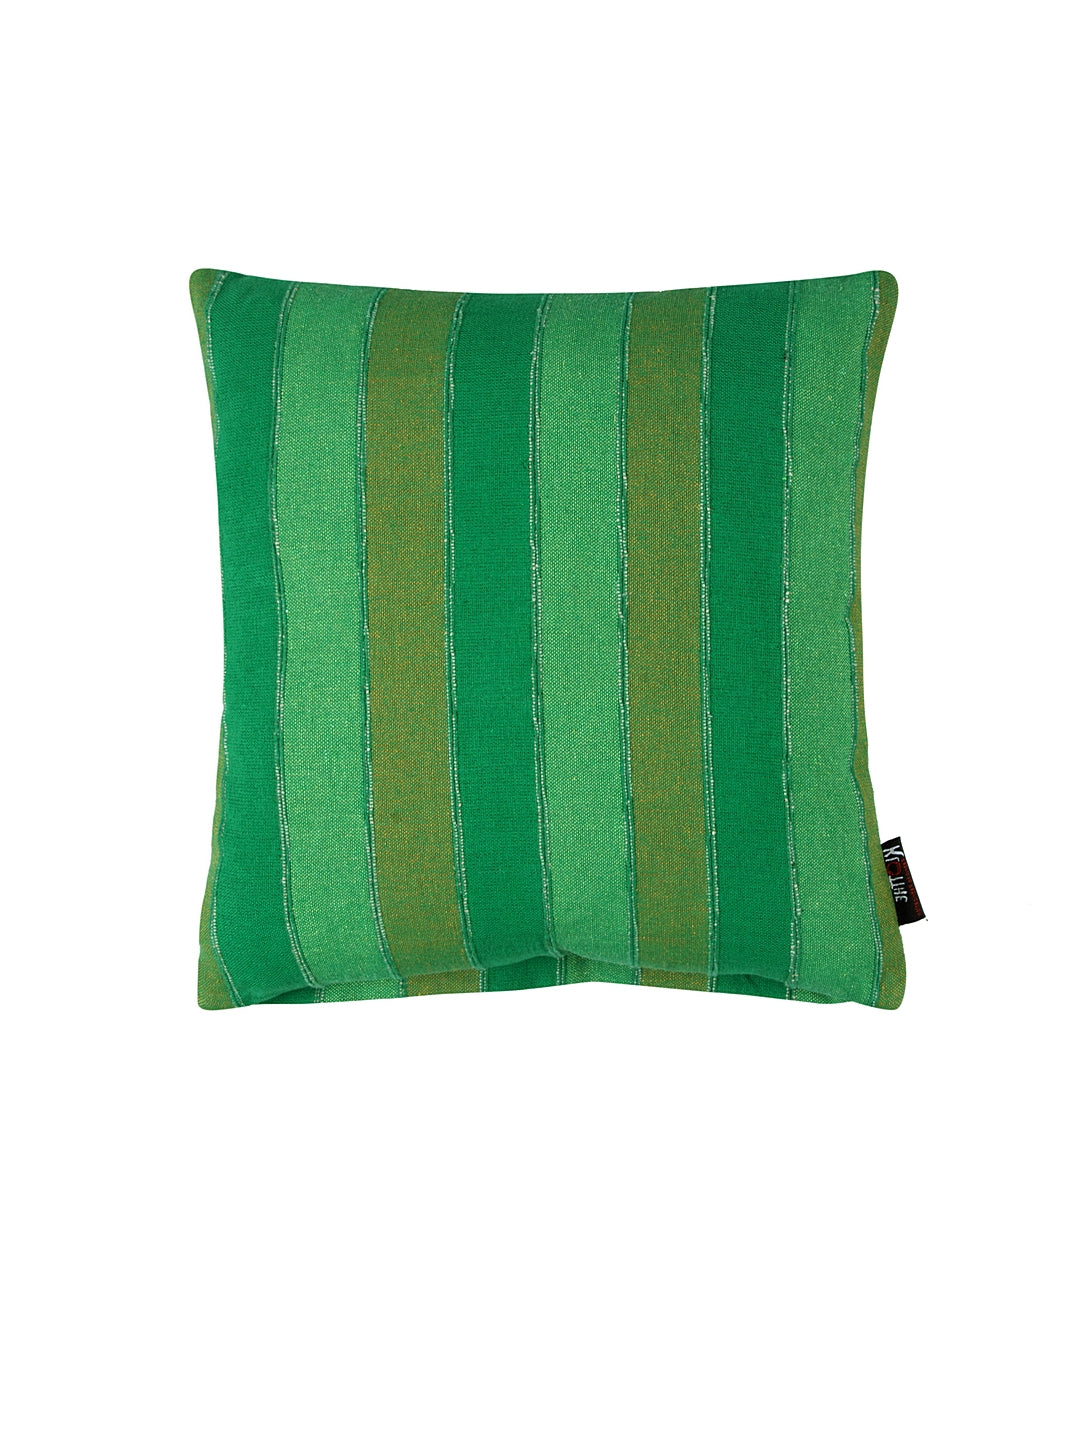 KLOTTHE Set of 5 Green Cotton Jacquard Cushion Covers (35X35 cm)